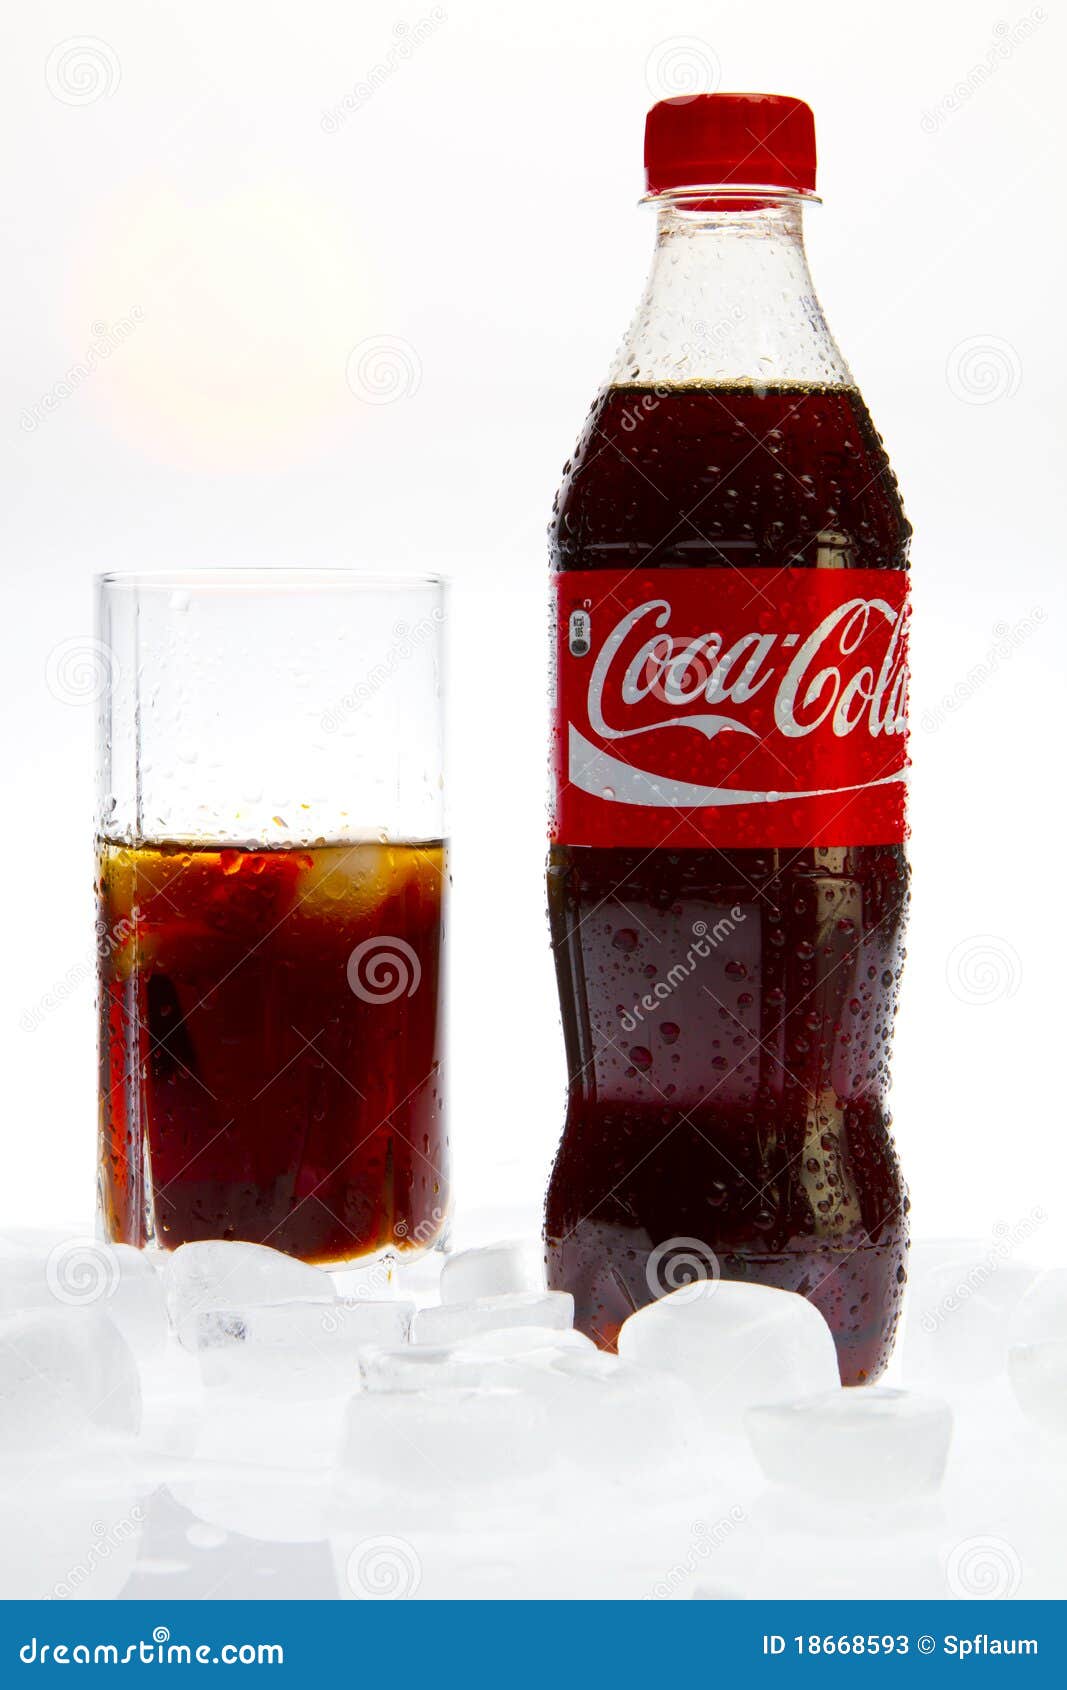 Coca Cola Editorial Stock Photo - Image: 18668593